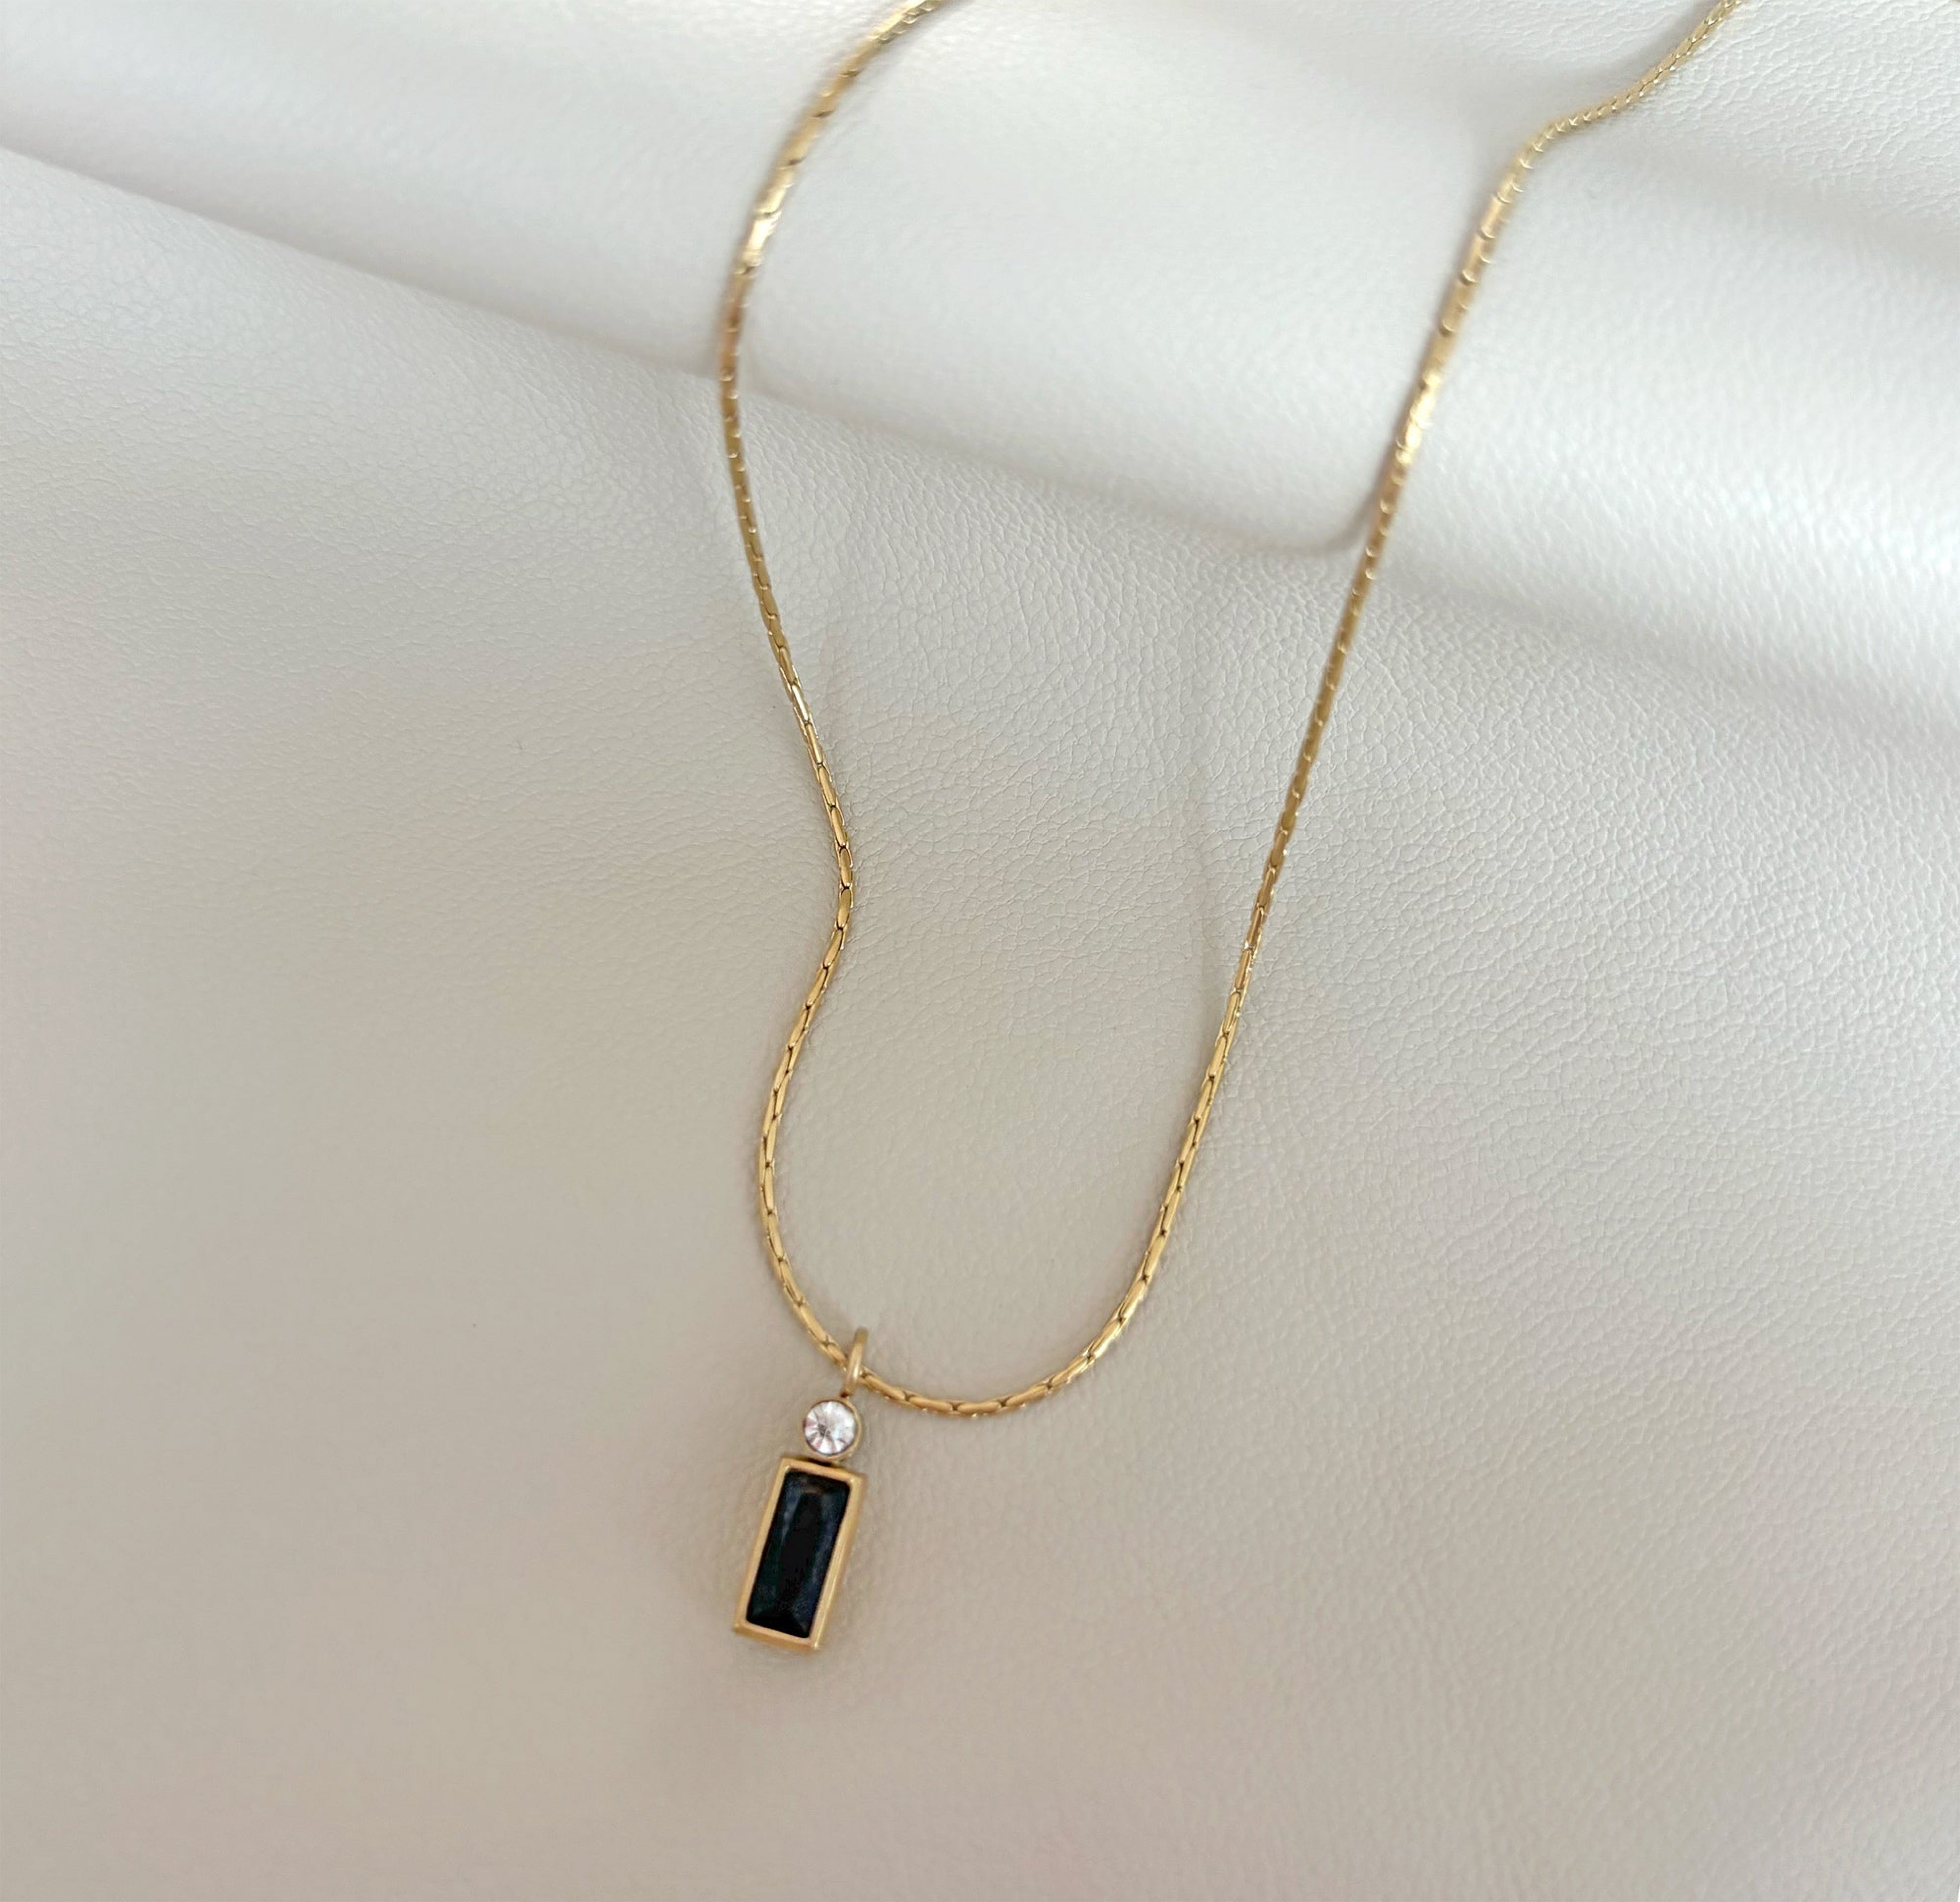 gold dainty black pendant necklace birthday gift waterproof jewelry